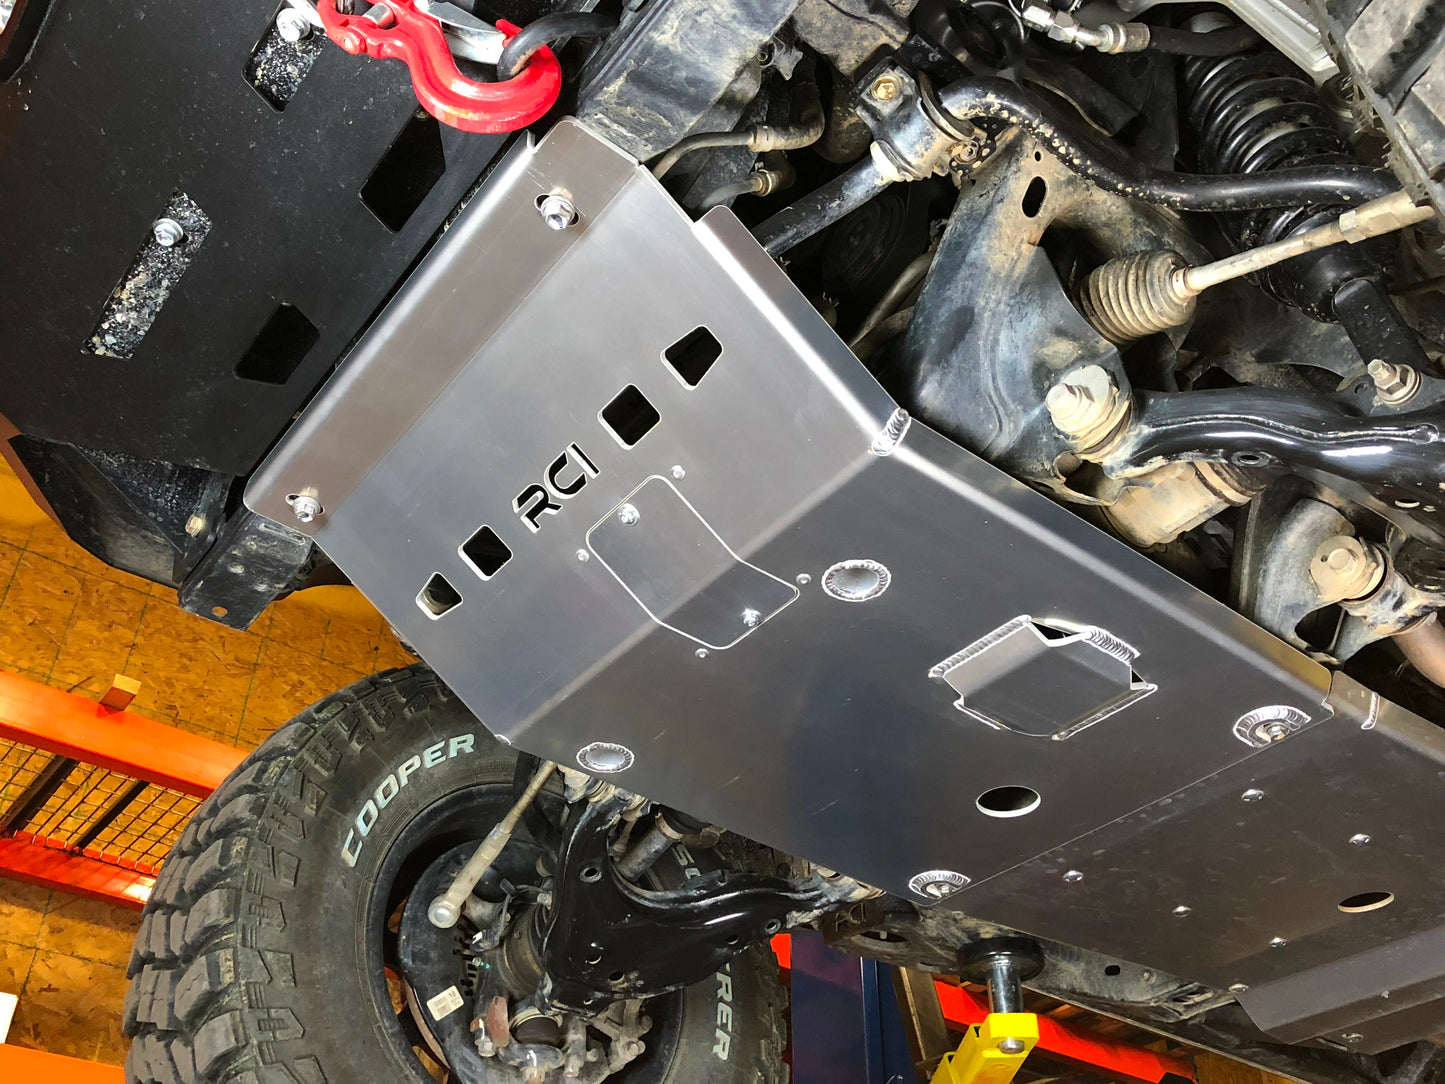 RCI Engine Skid Plate | Toyota Tacoma 05-Present - Roam Overland Outfitters